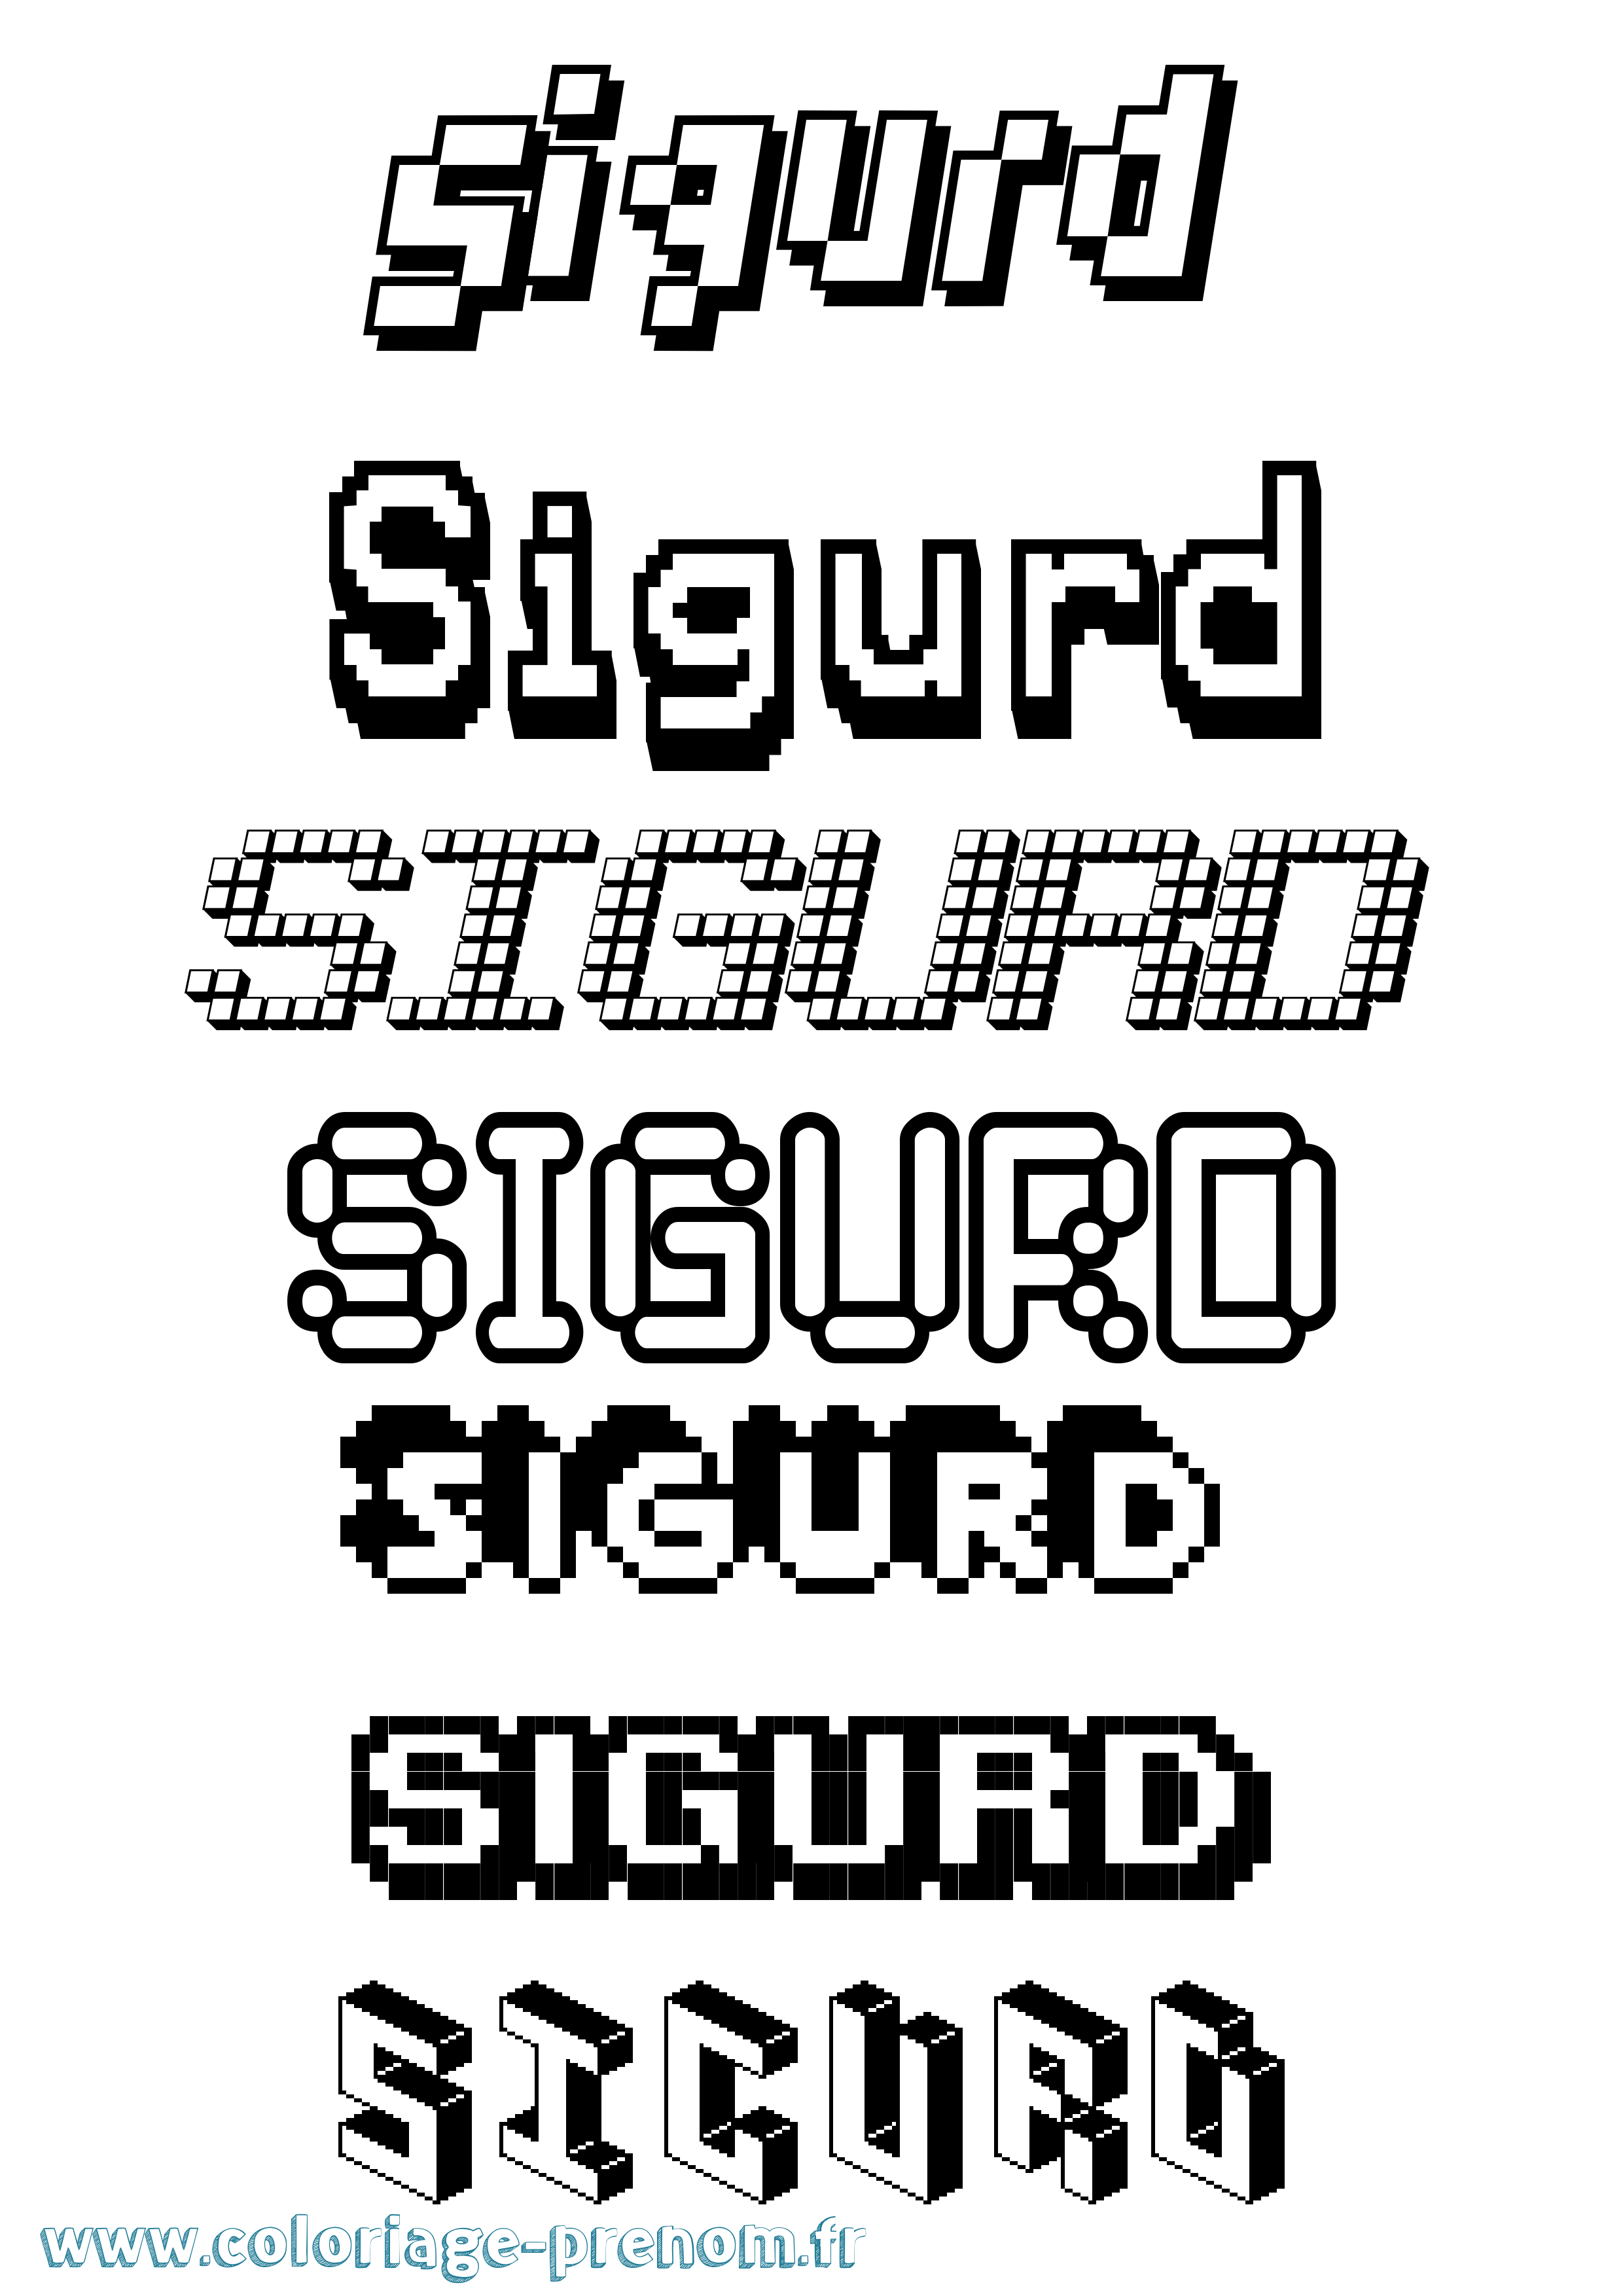 Coloriage prénom Sigurd Pixel